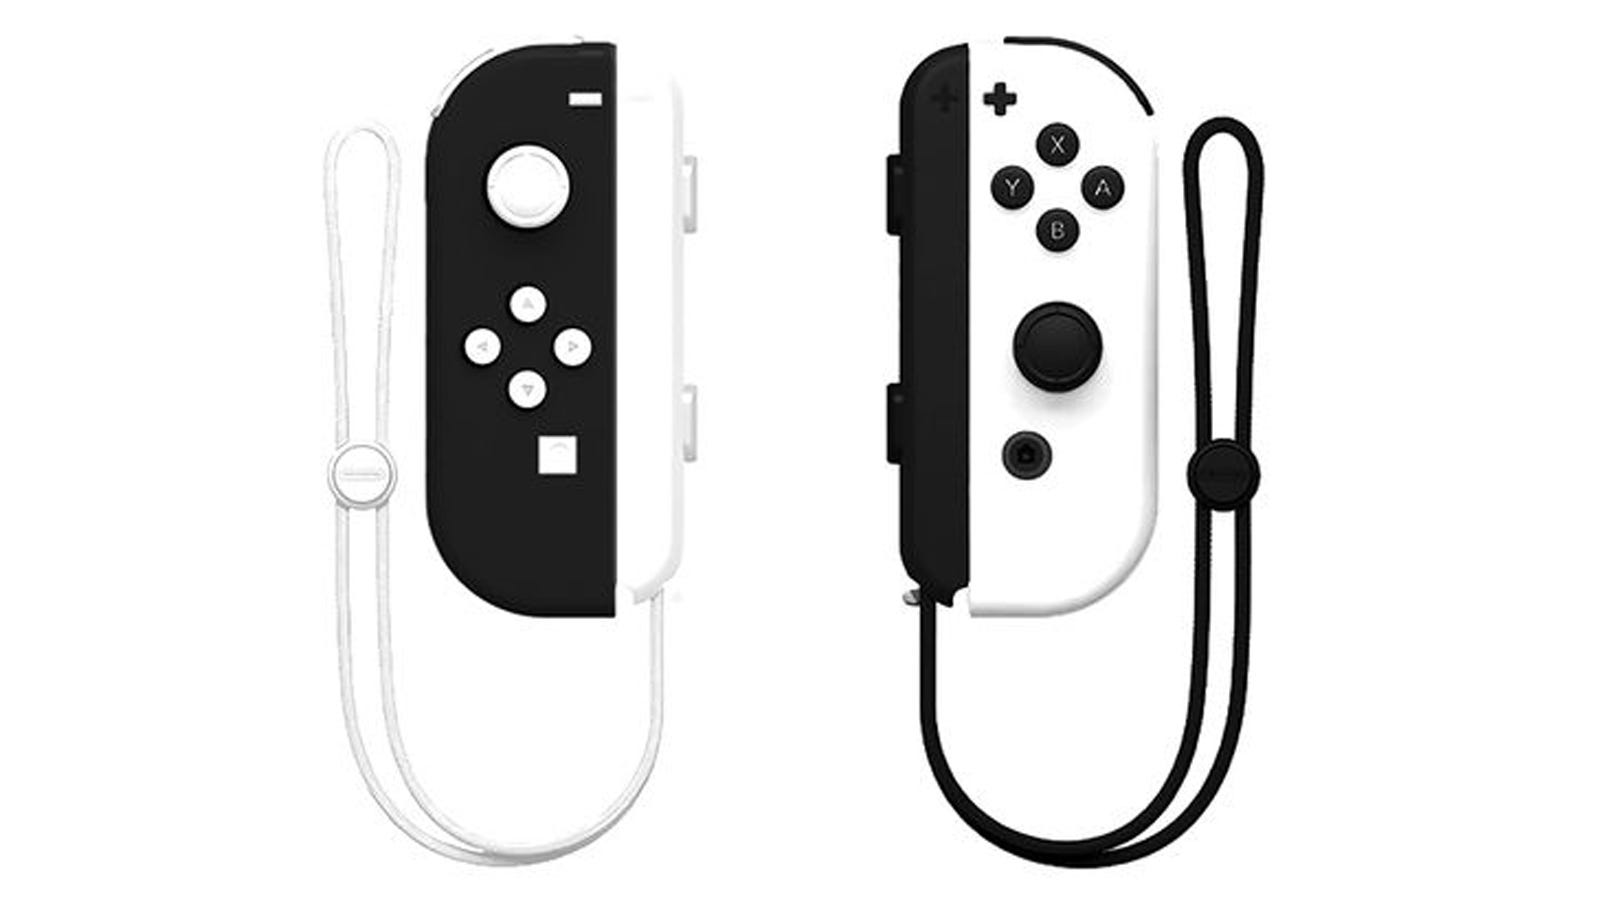 Nintendo Switch 2 report details magnetic Joy-Con